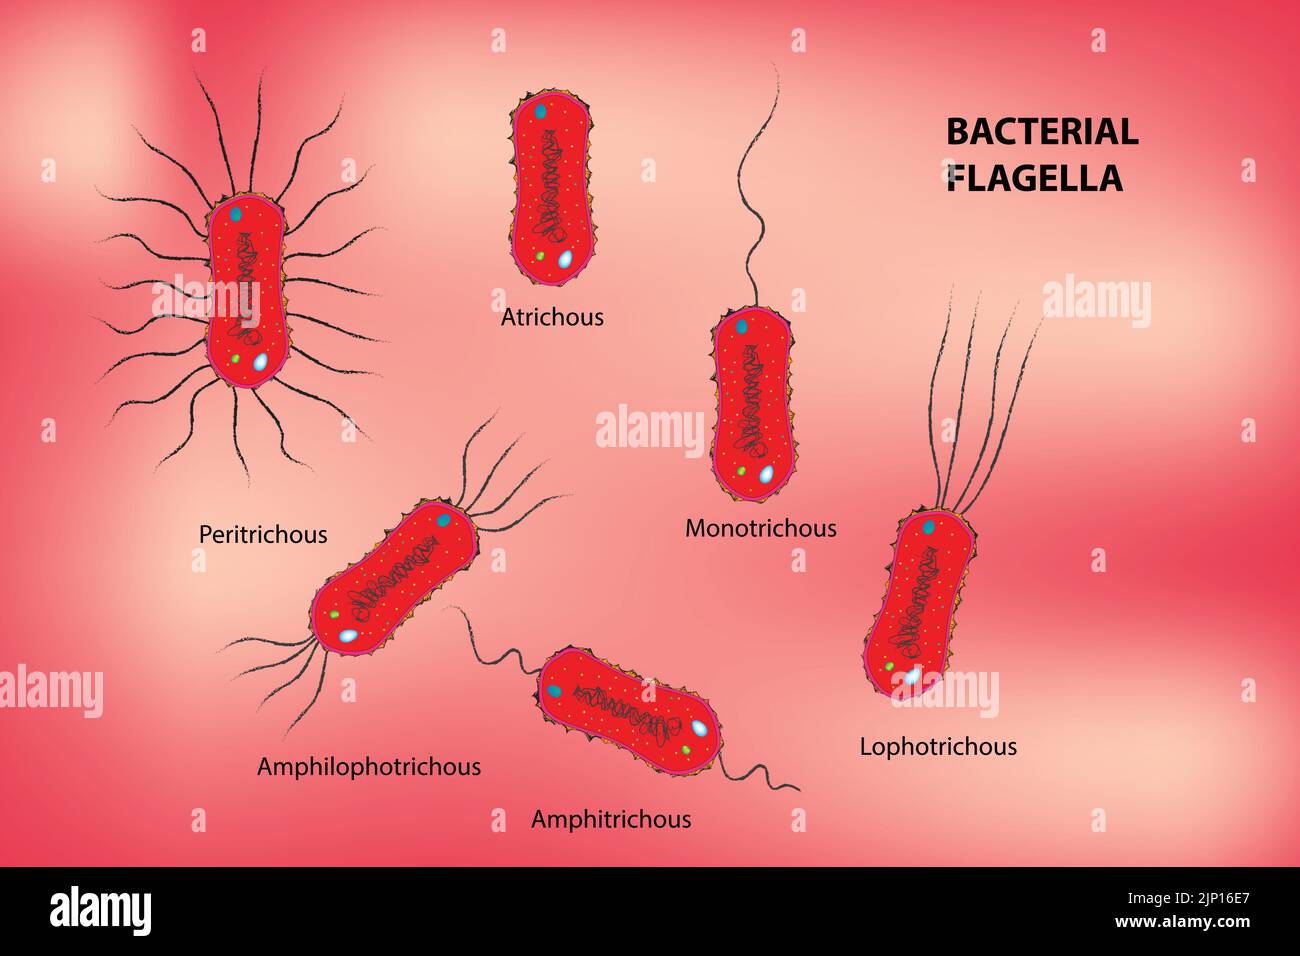 Classification of Bacterial Flagella Stock Vector